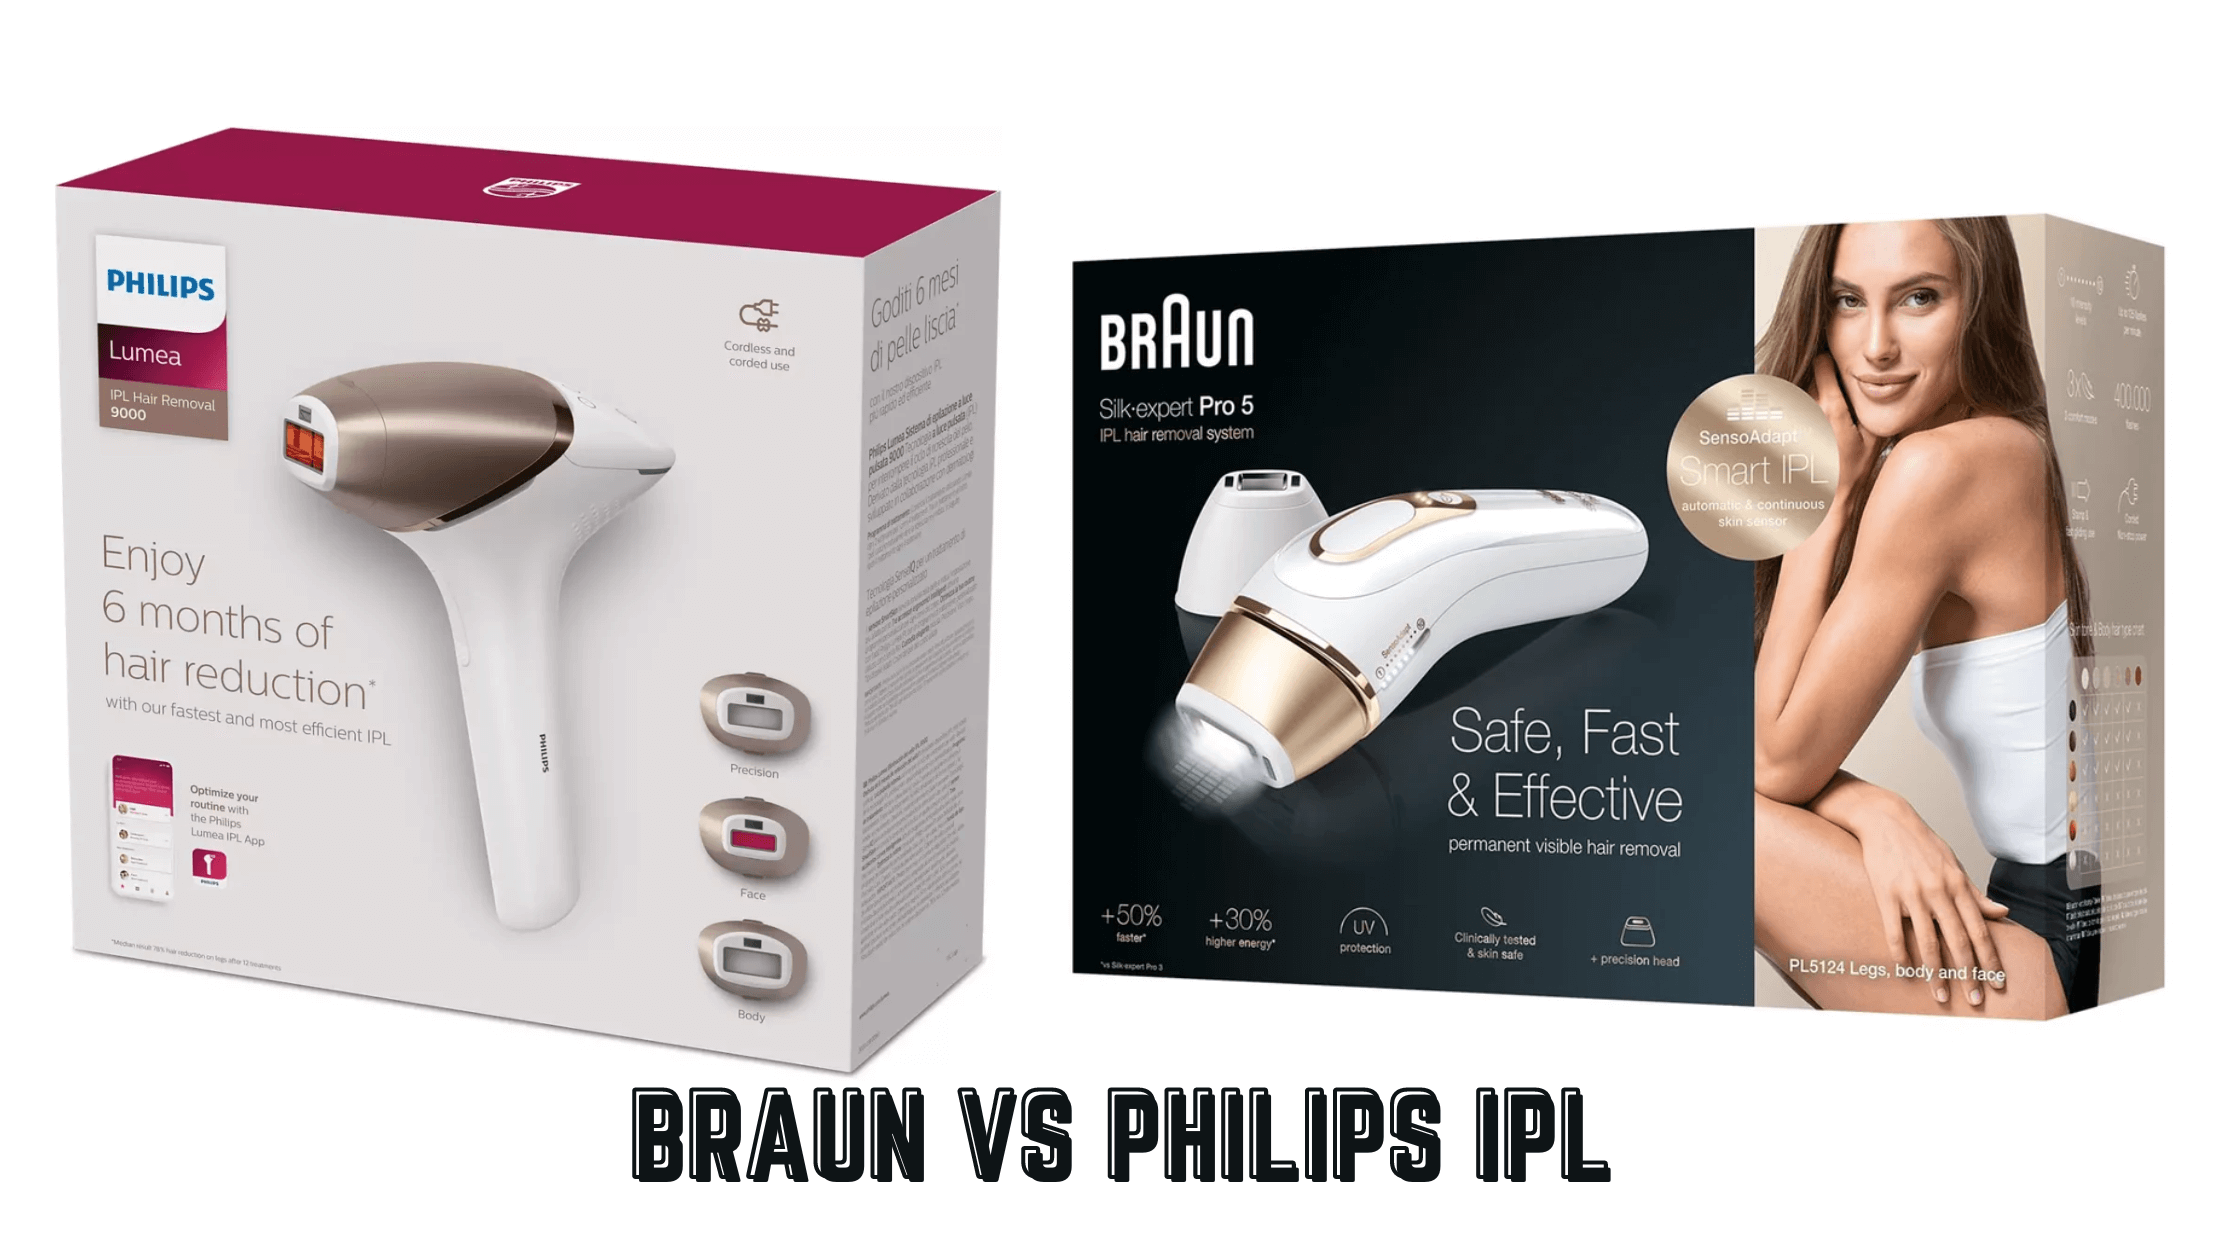 Braun IPL Silk Expert Pro 5 Vs Philips Lumea: Which Is Better?